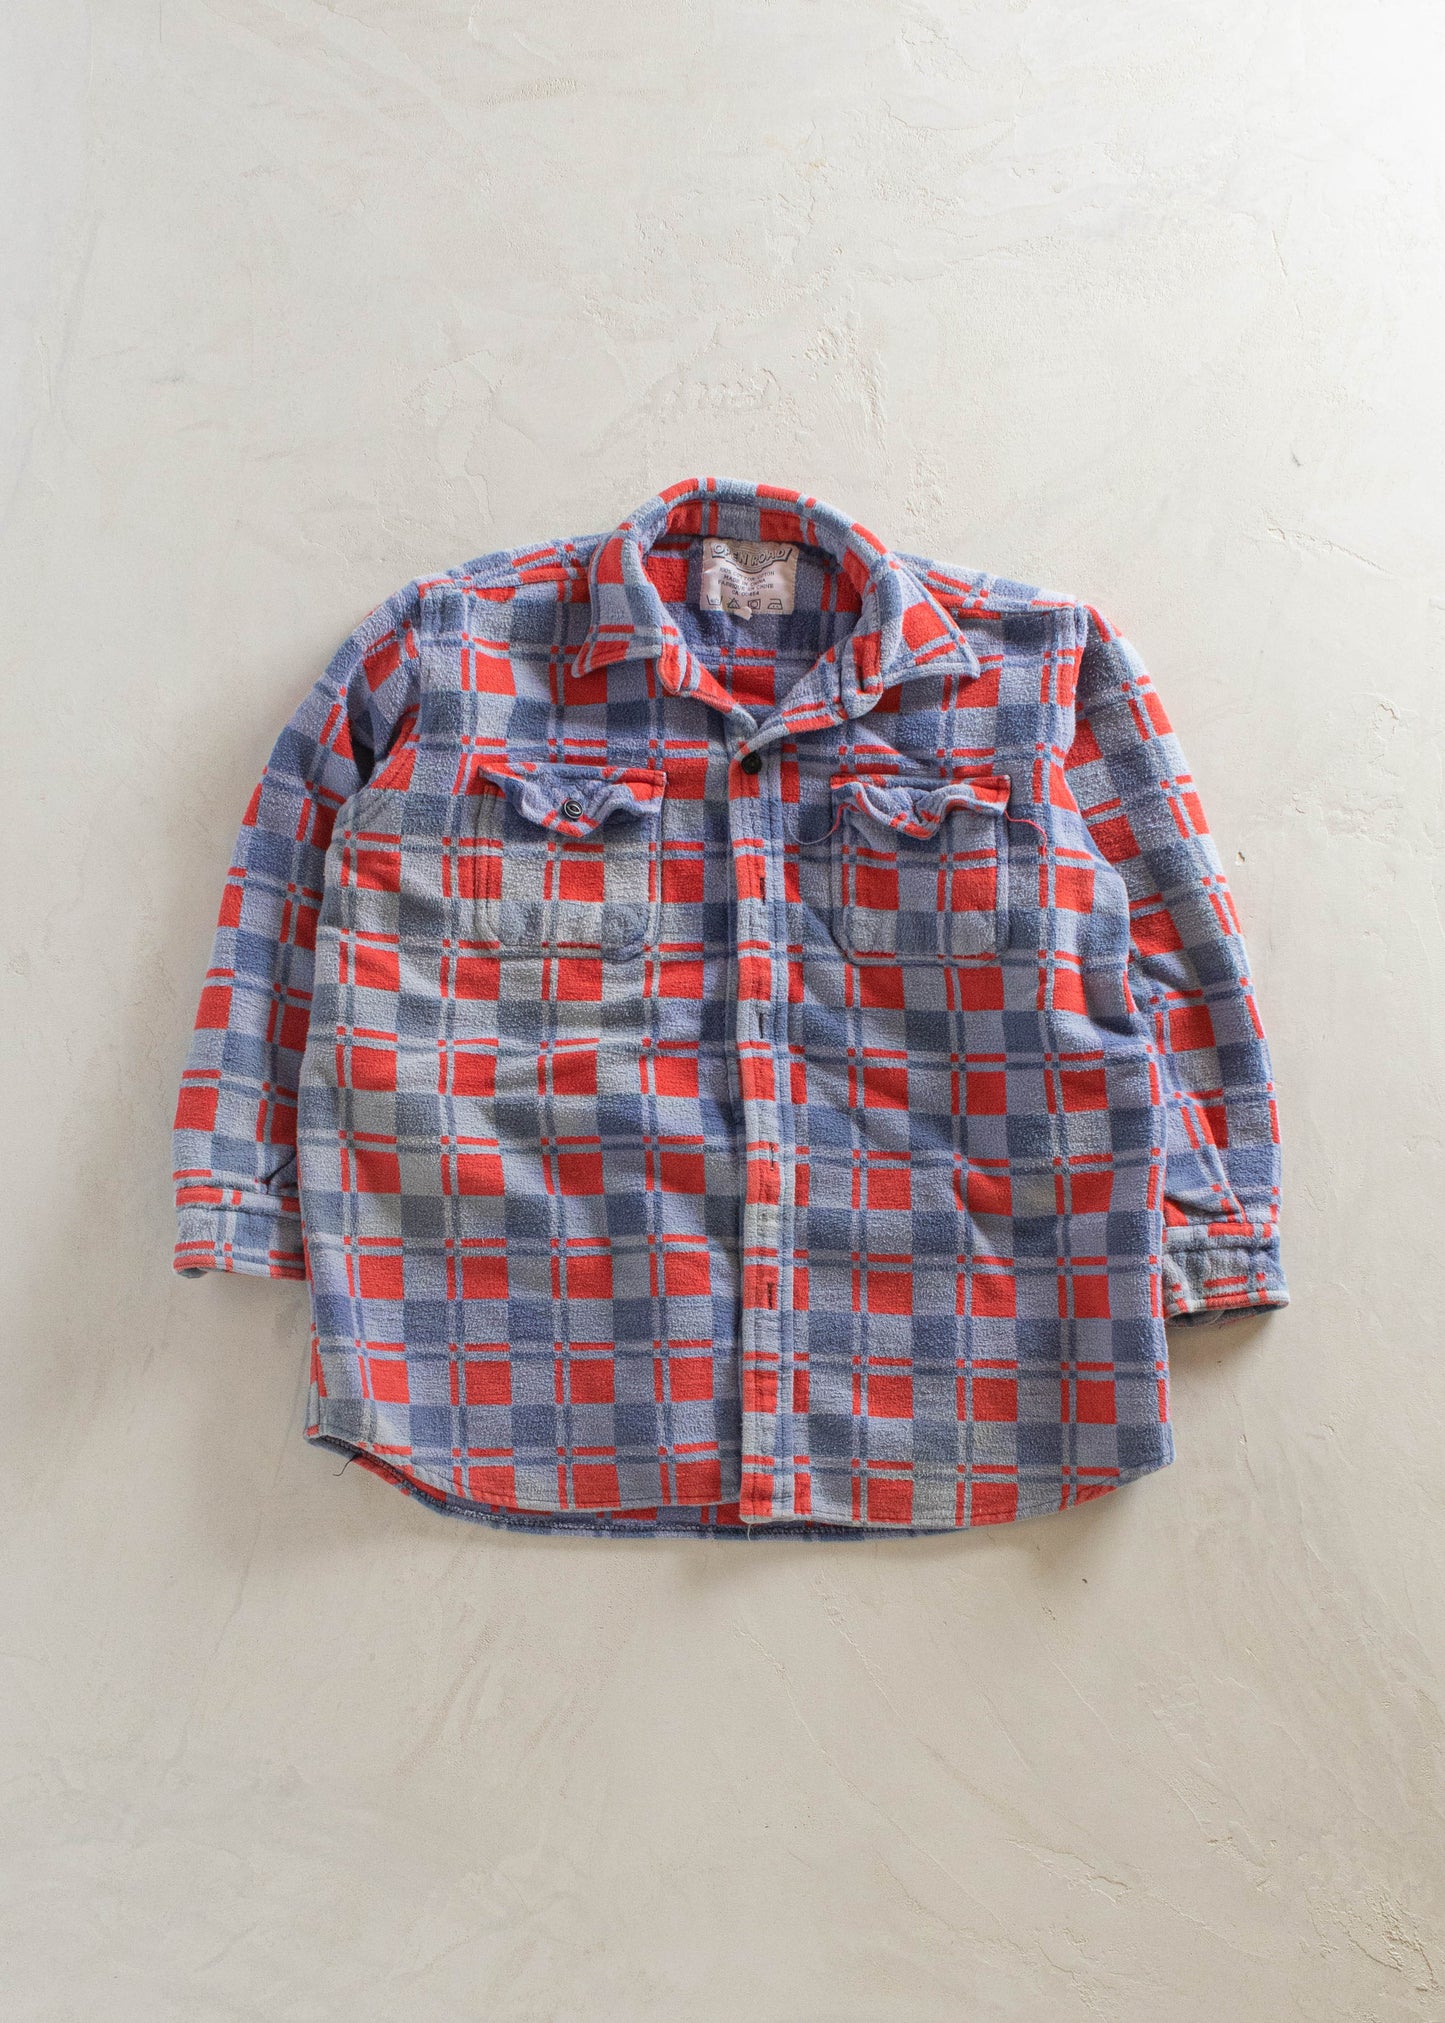 1980s Open Road Flannel Button Up Shirt Size L/XL